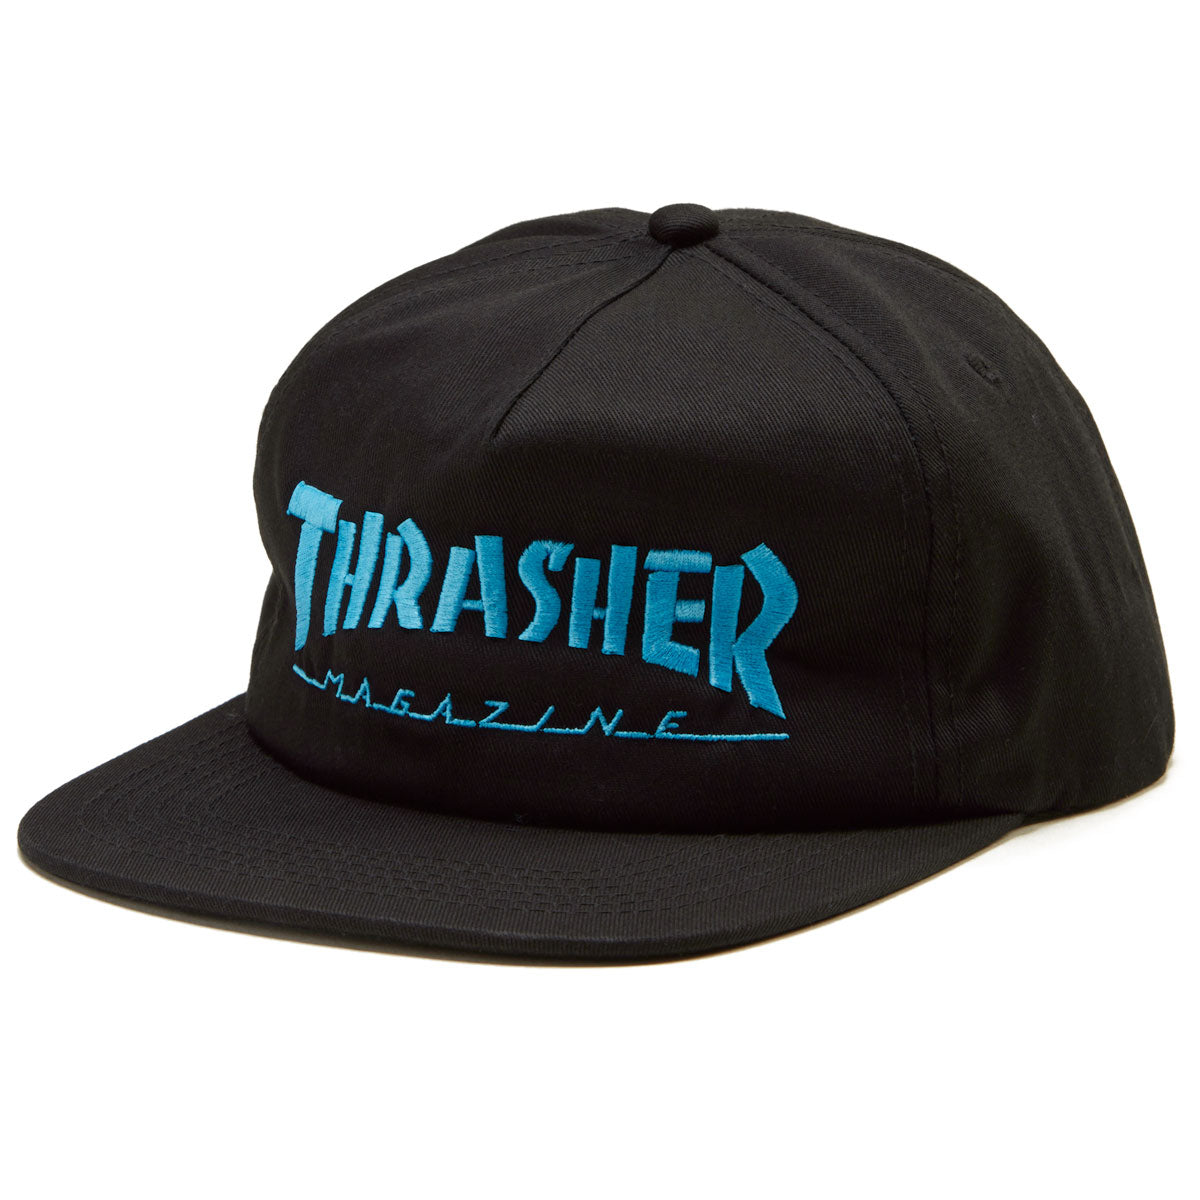 Thrasher Skate Mag Logo Snapback Hat - Black/Blue image 1